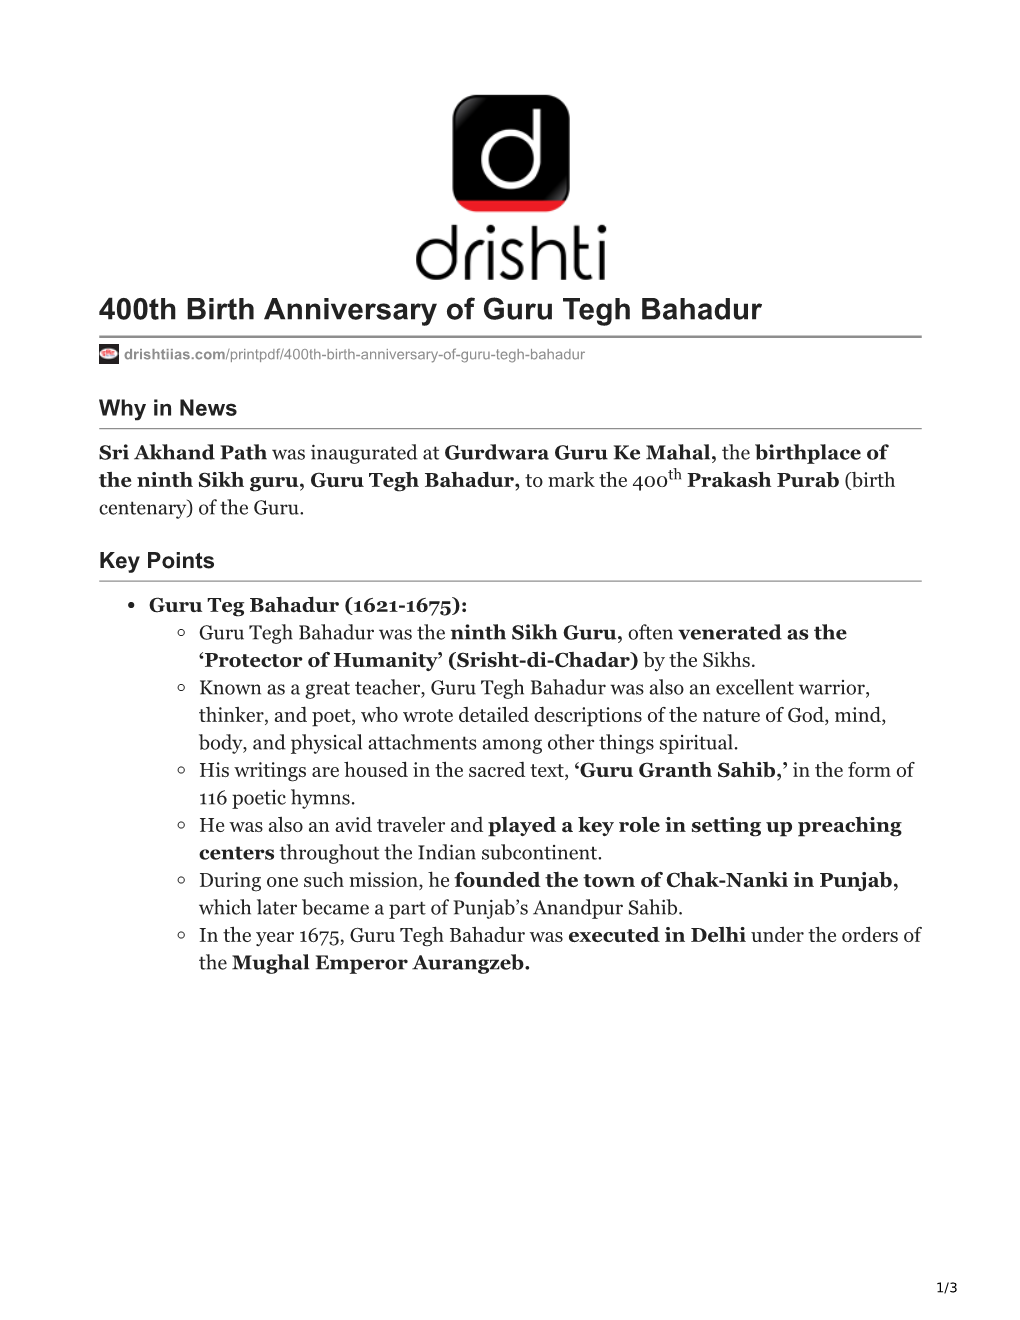 400Th Birth Anniversary of Guru Tegh Bahadur